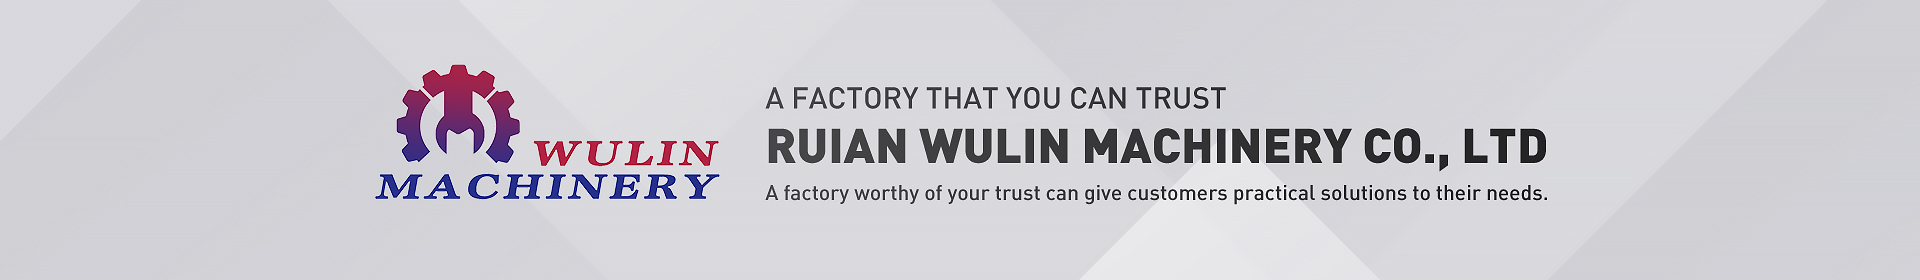 Ruian Wulin Machinery Co., Ltd